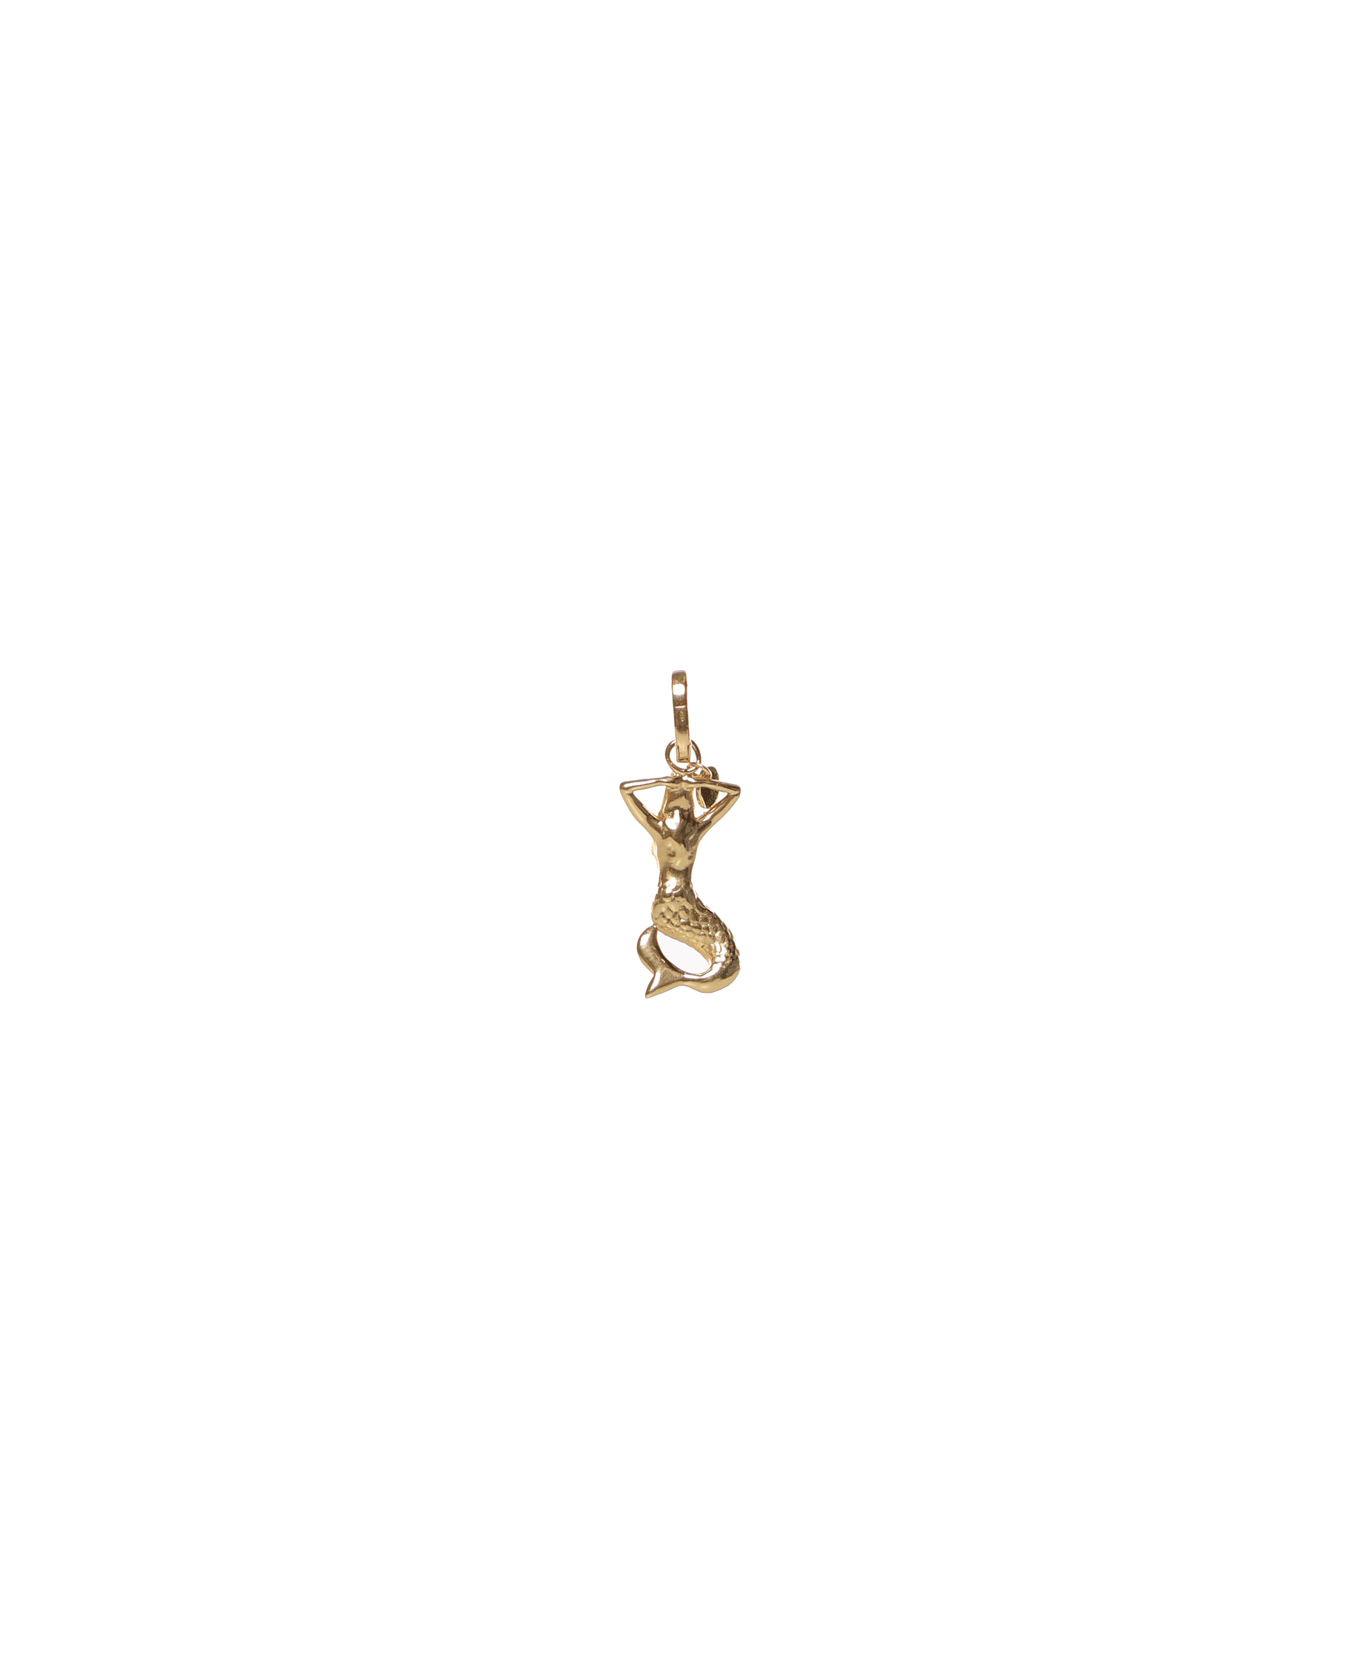 Loewe X Paula's Ibiza Charm - Gold アクセサリー